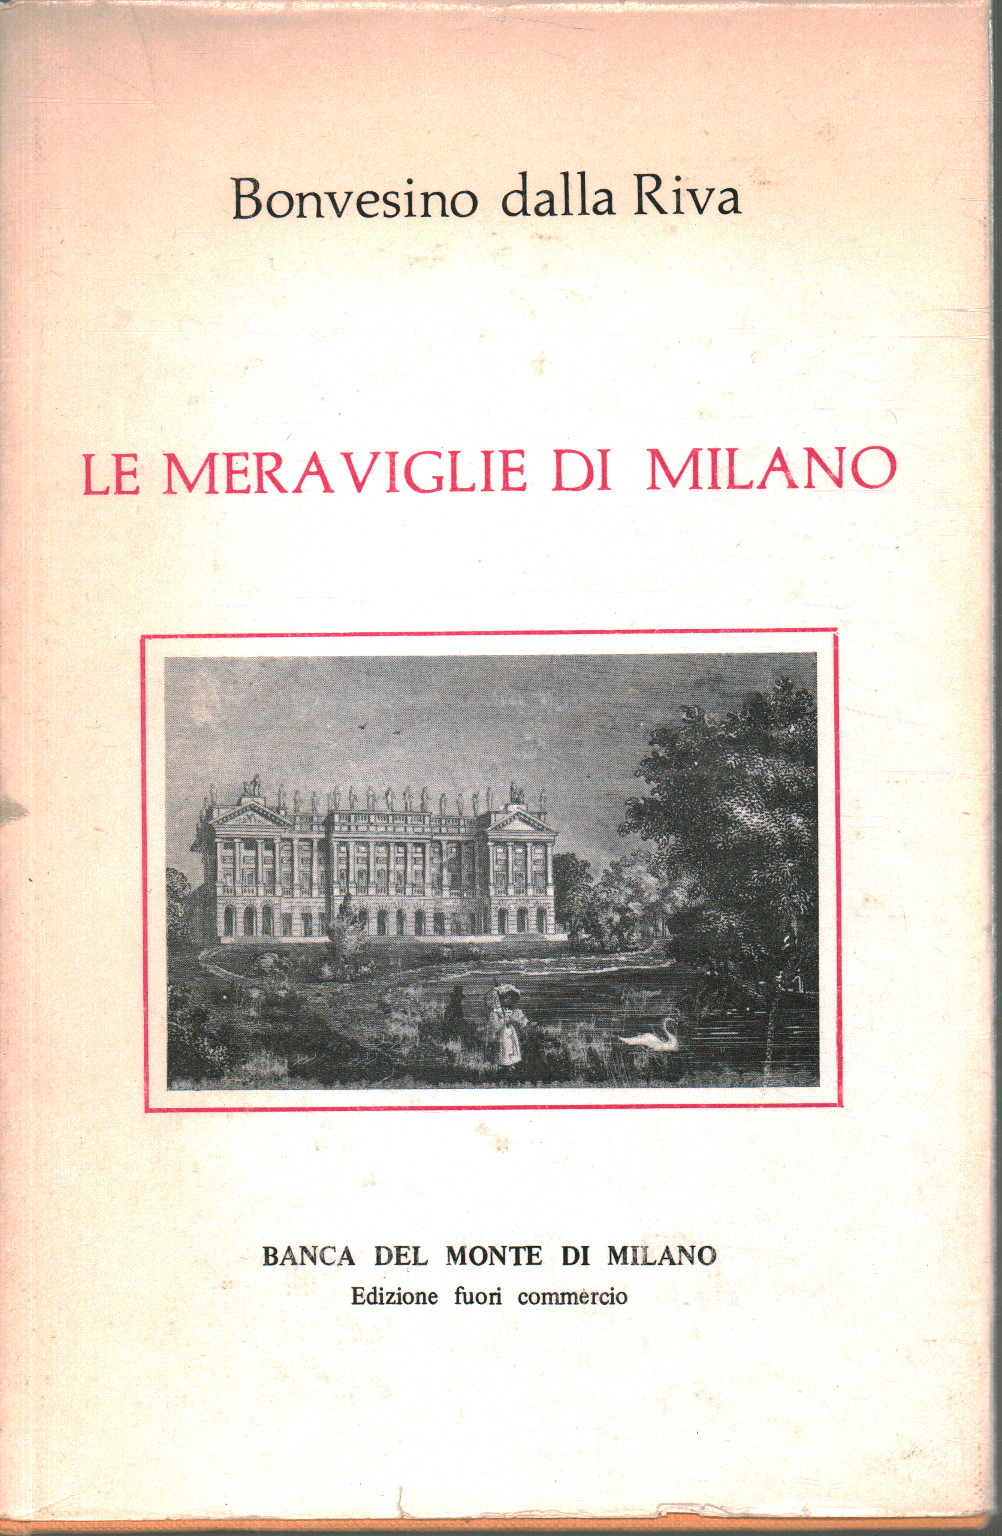 Les merveilles de Milan, Bonvesino à partir de la Rive